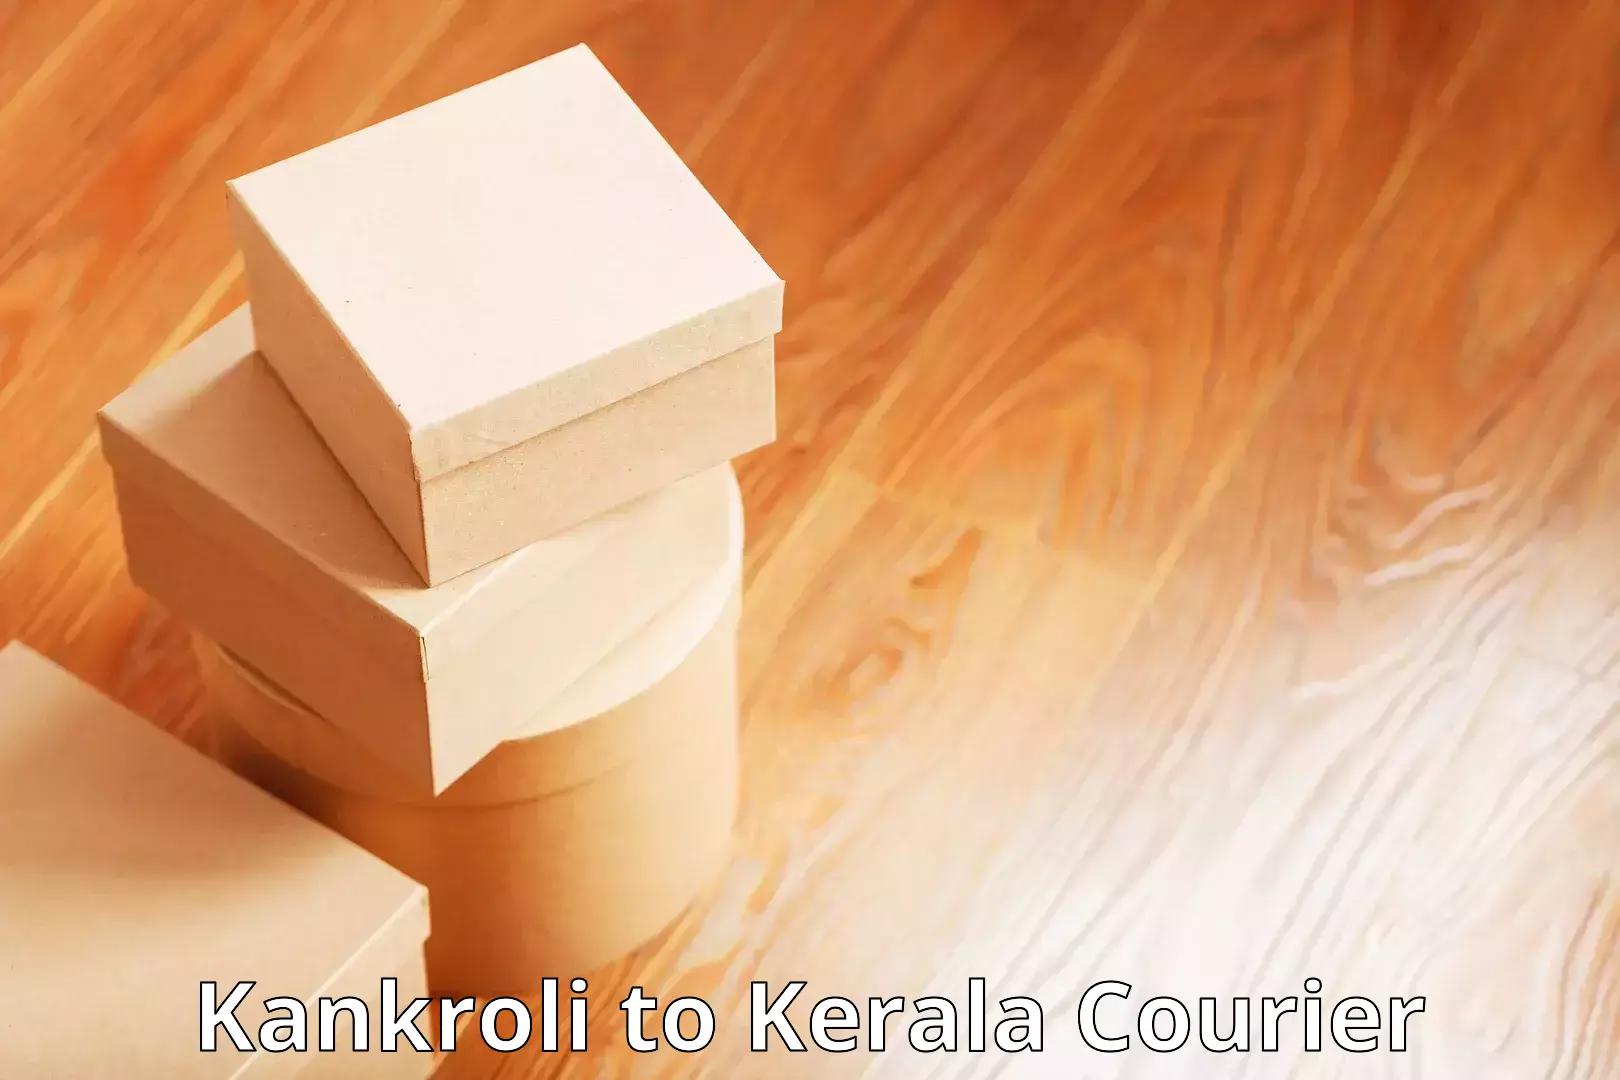 Express mail solutions Kankroli to Cochin Port Kochi